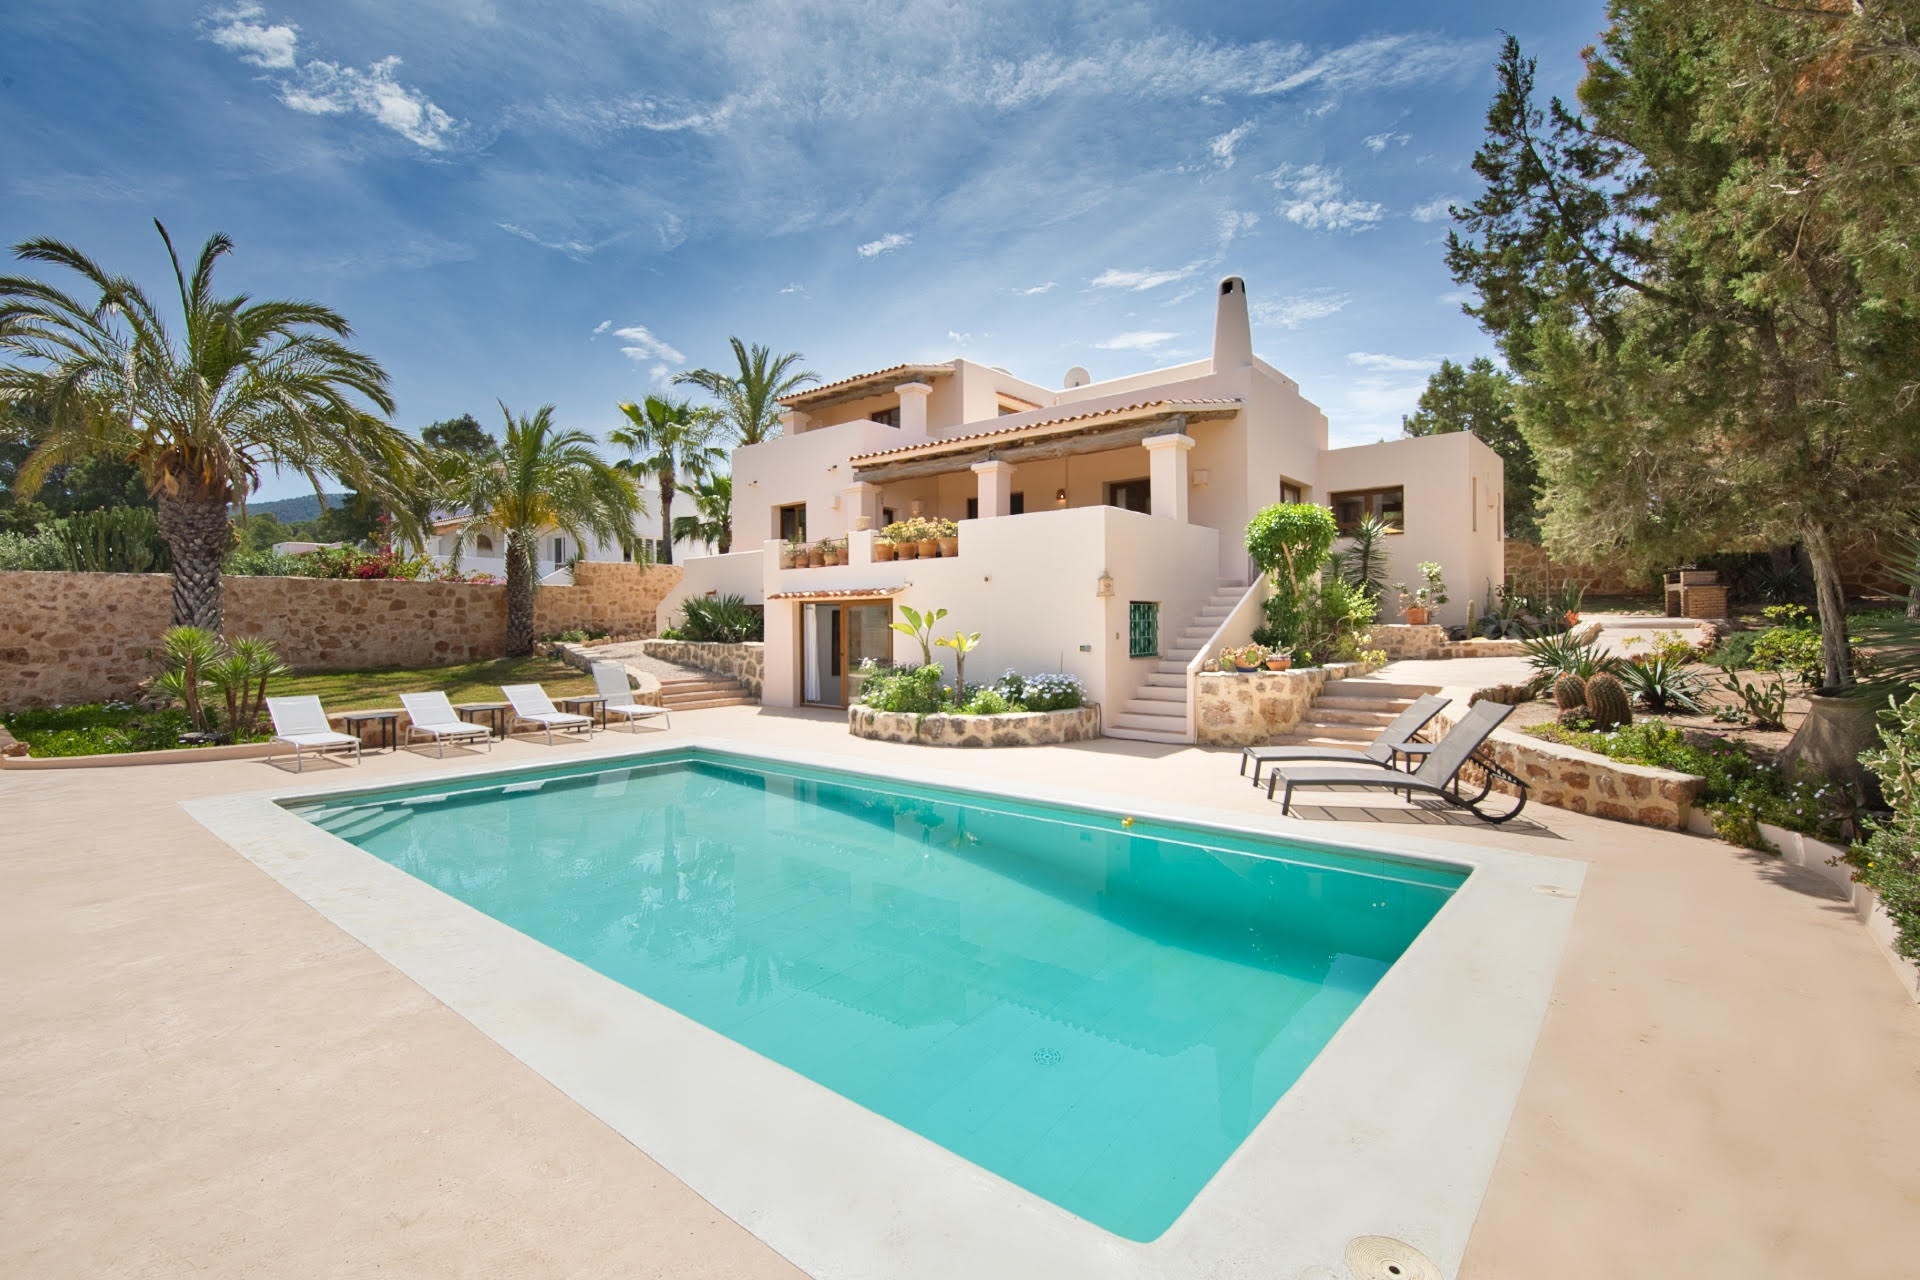 Prachtige villa gelegen tussen het strand van Cala Vadella en Cala Vadella